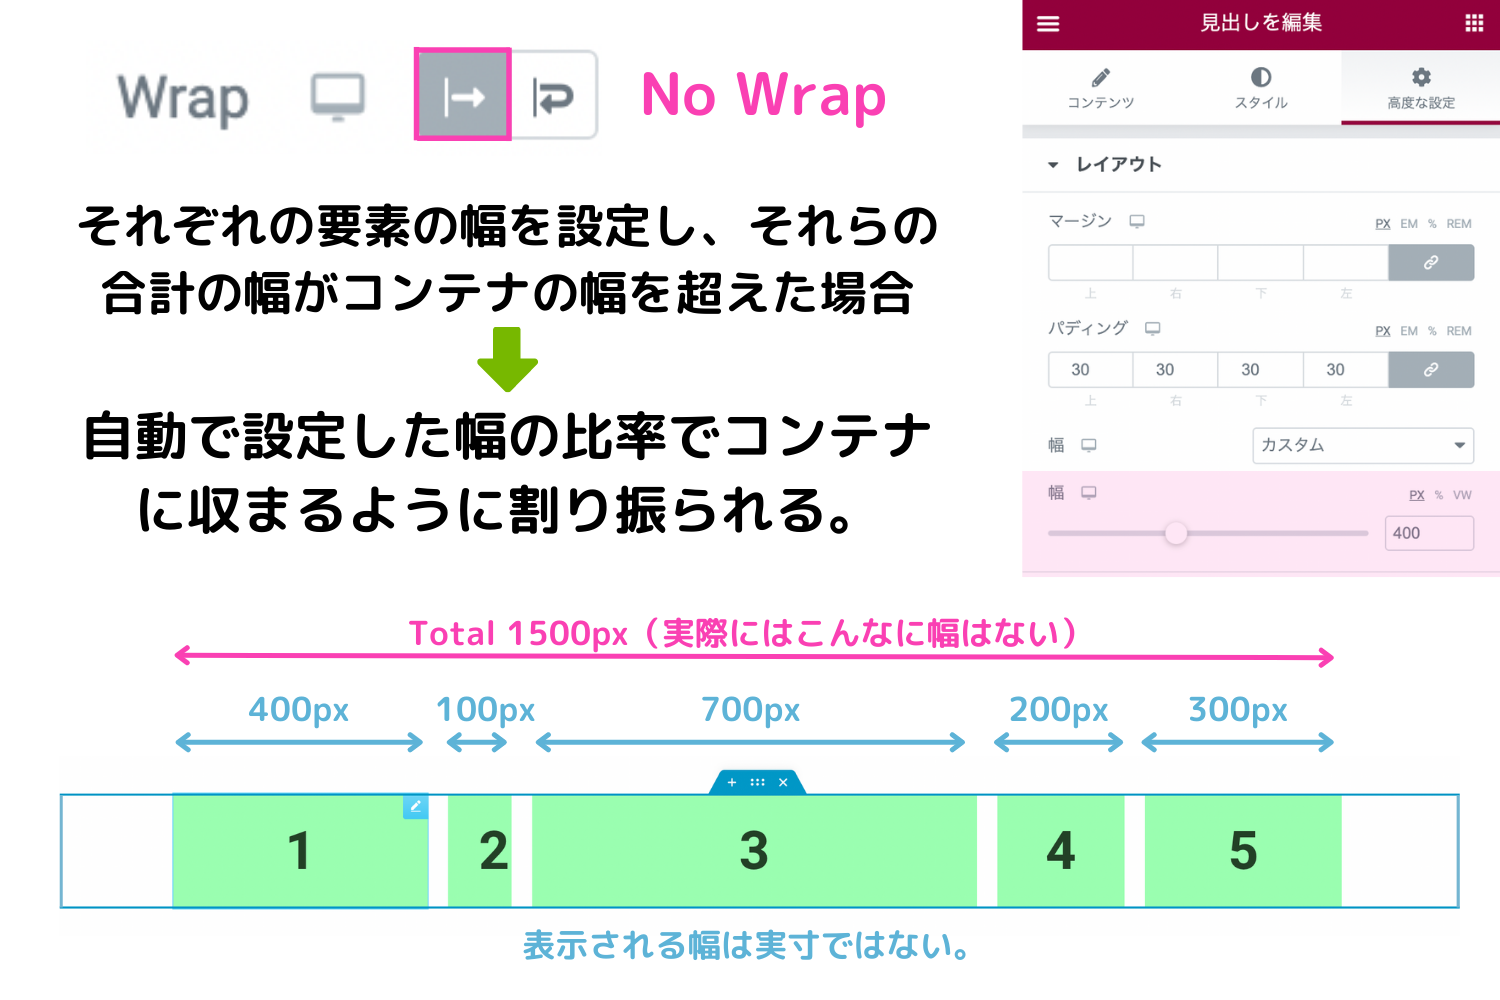 『Wrap』機能の『No wrap』の説明